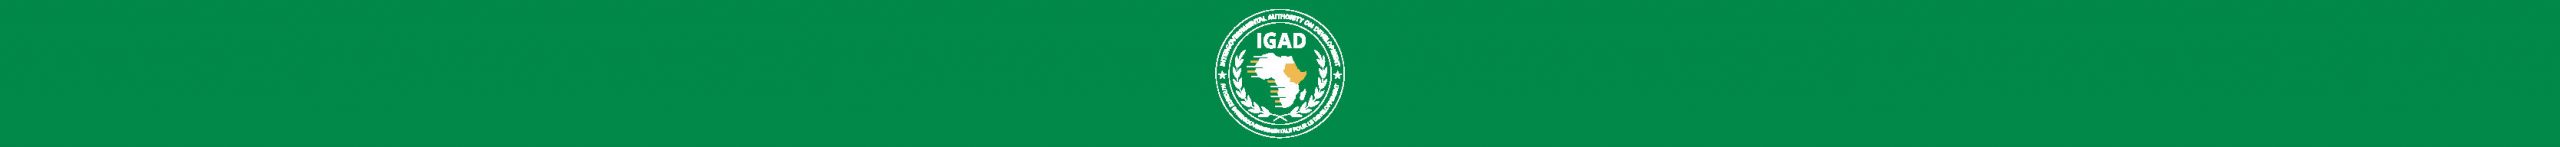 IGAD Embraces Migration And Development